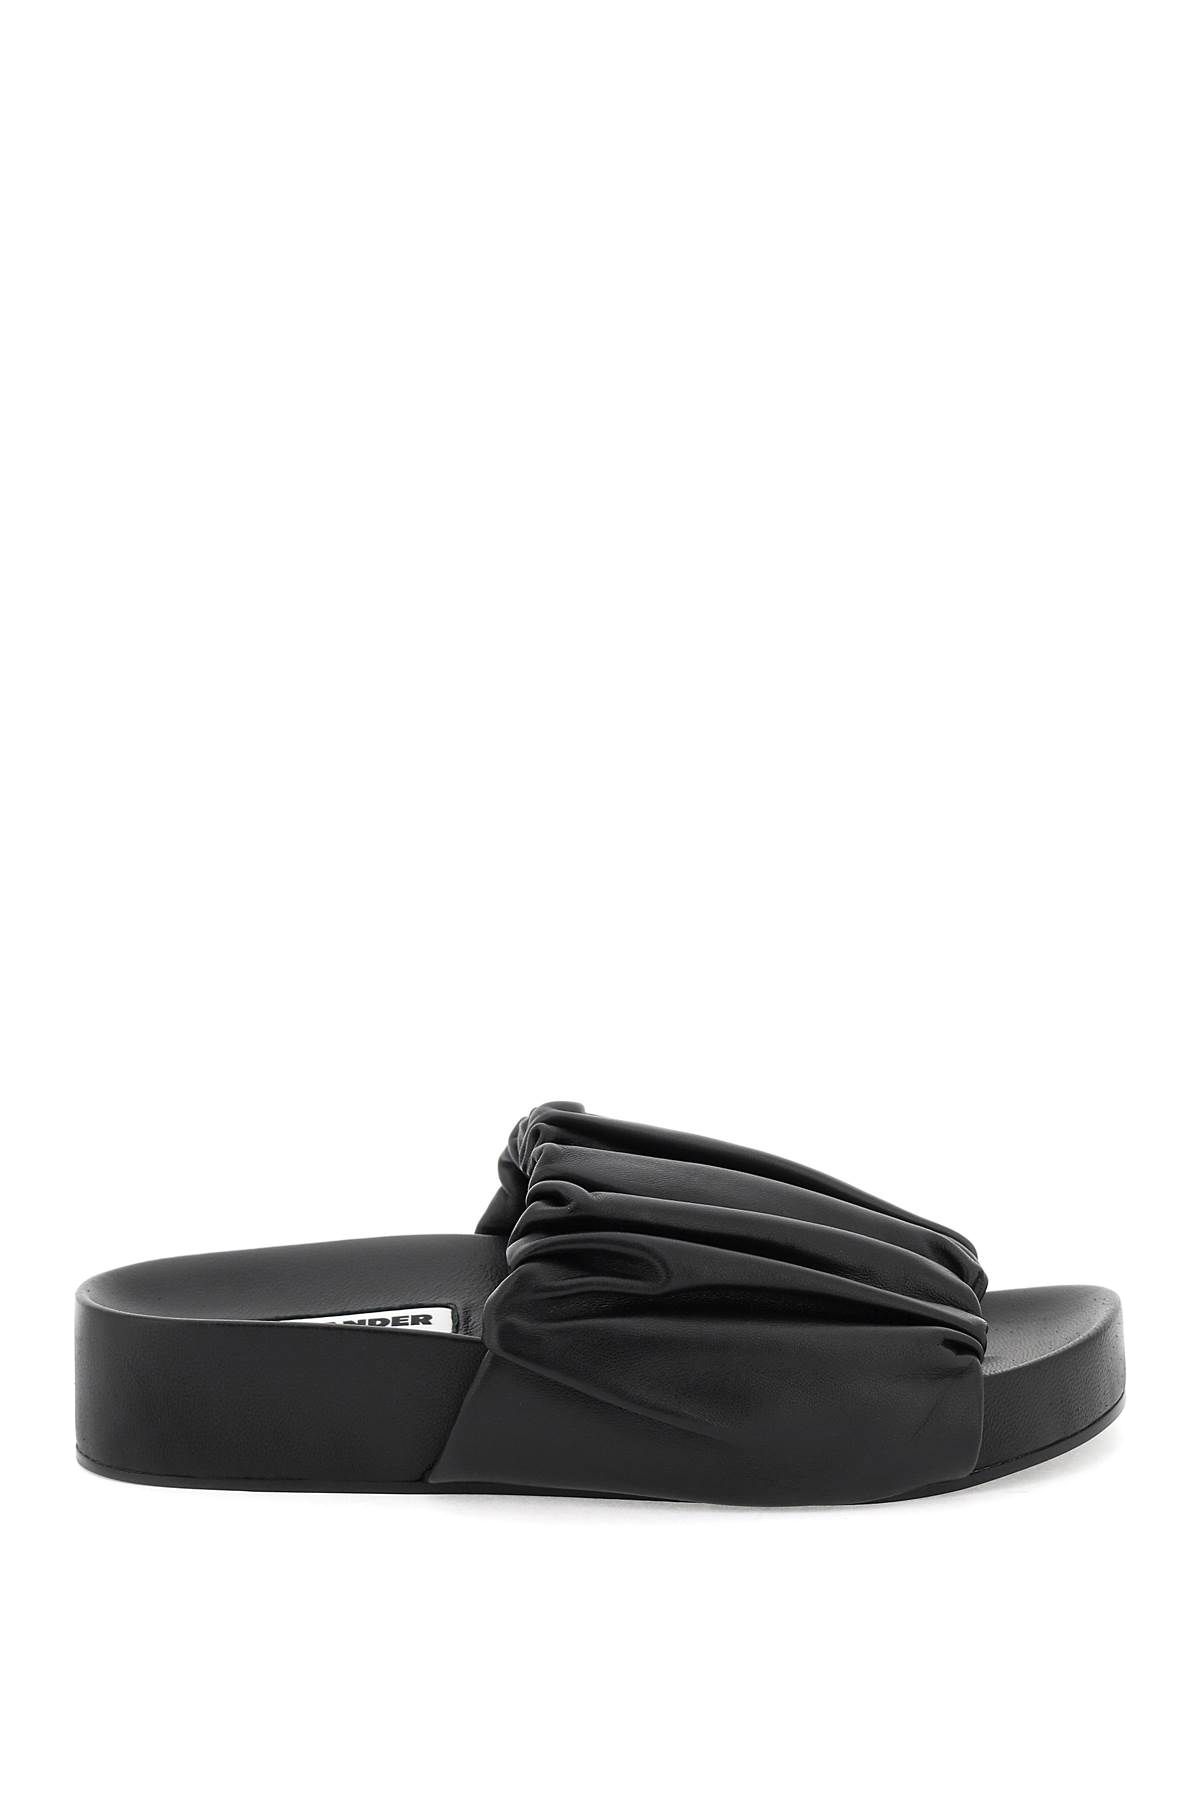 Jil Sander Nappa Leather Slides In Black